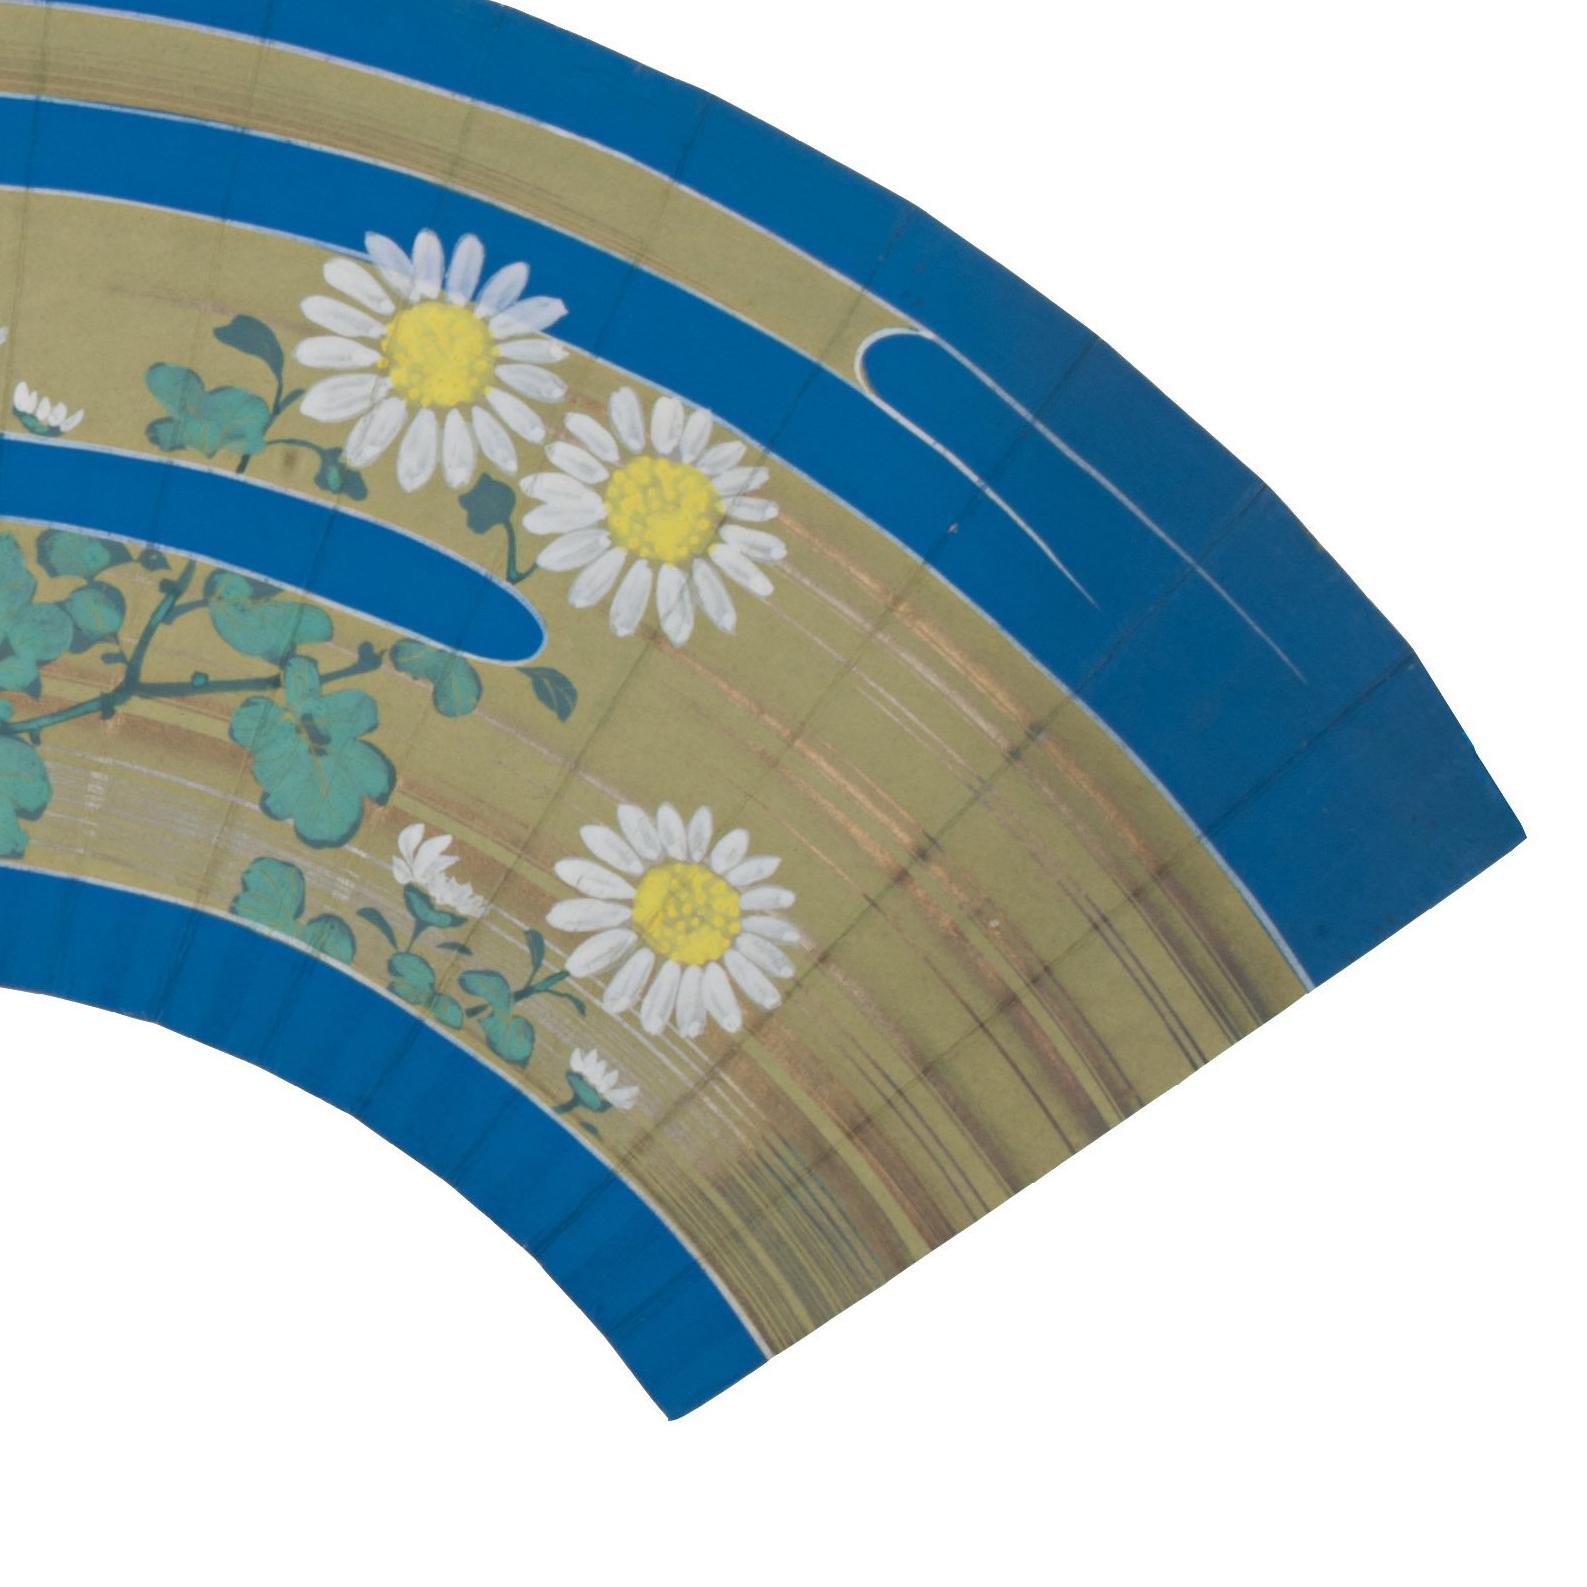 Hand painted Sensu folding fan